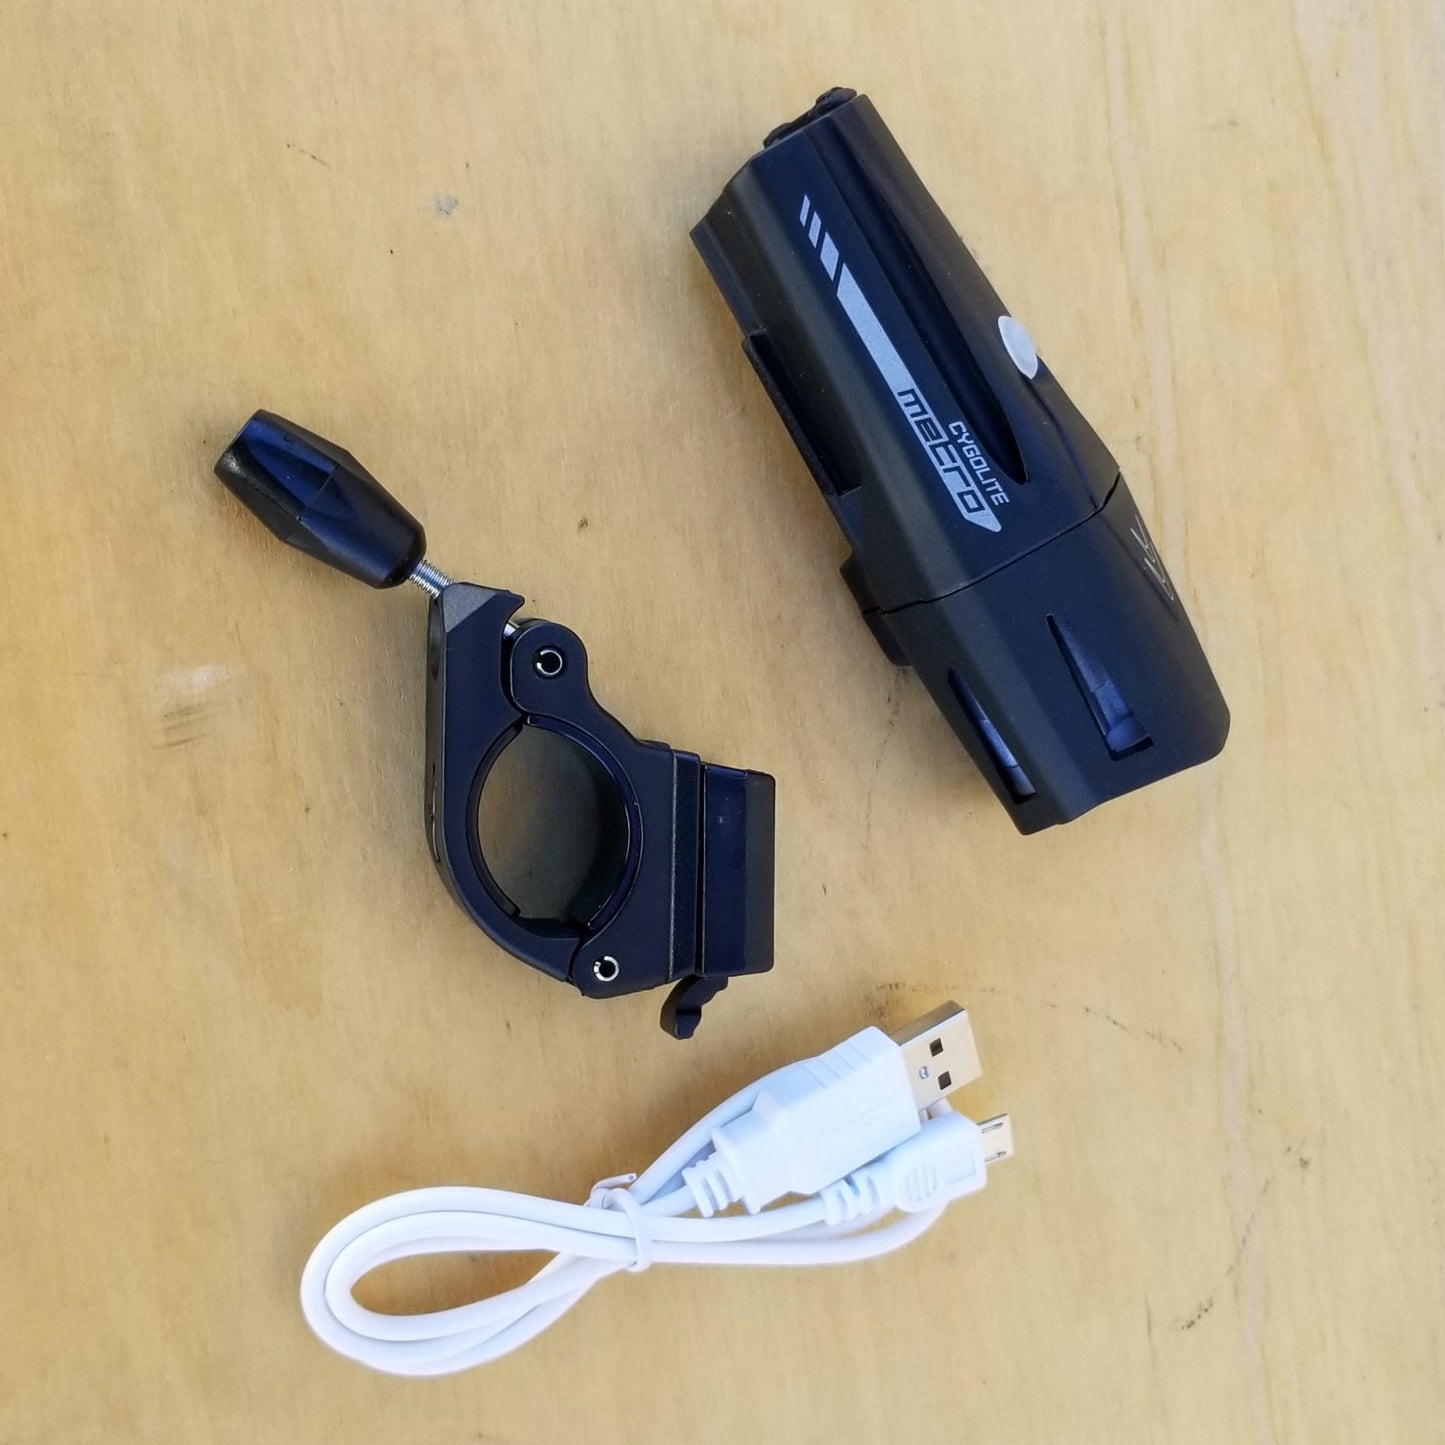 Light - Rechargeable battery - Cygolite Metro Plus 650 USB rechargeable